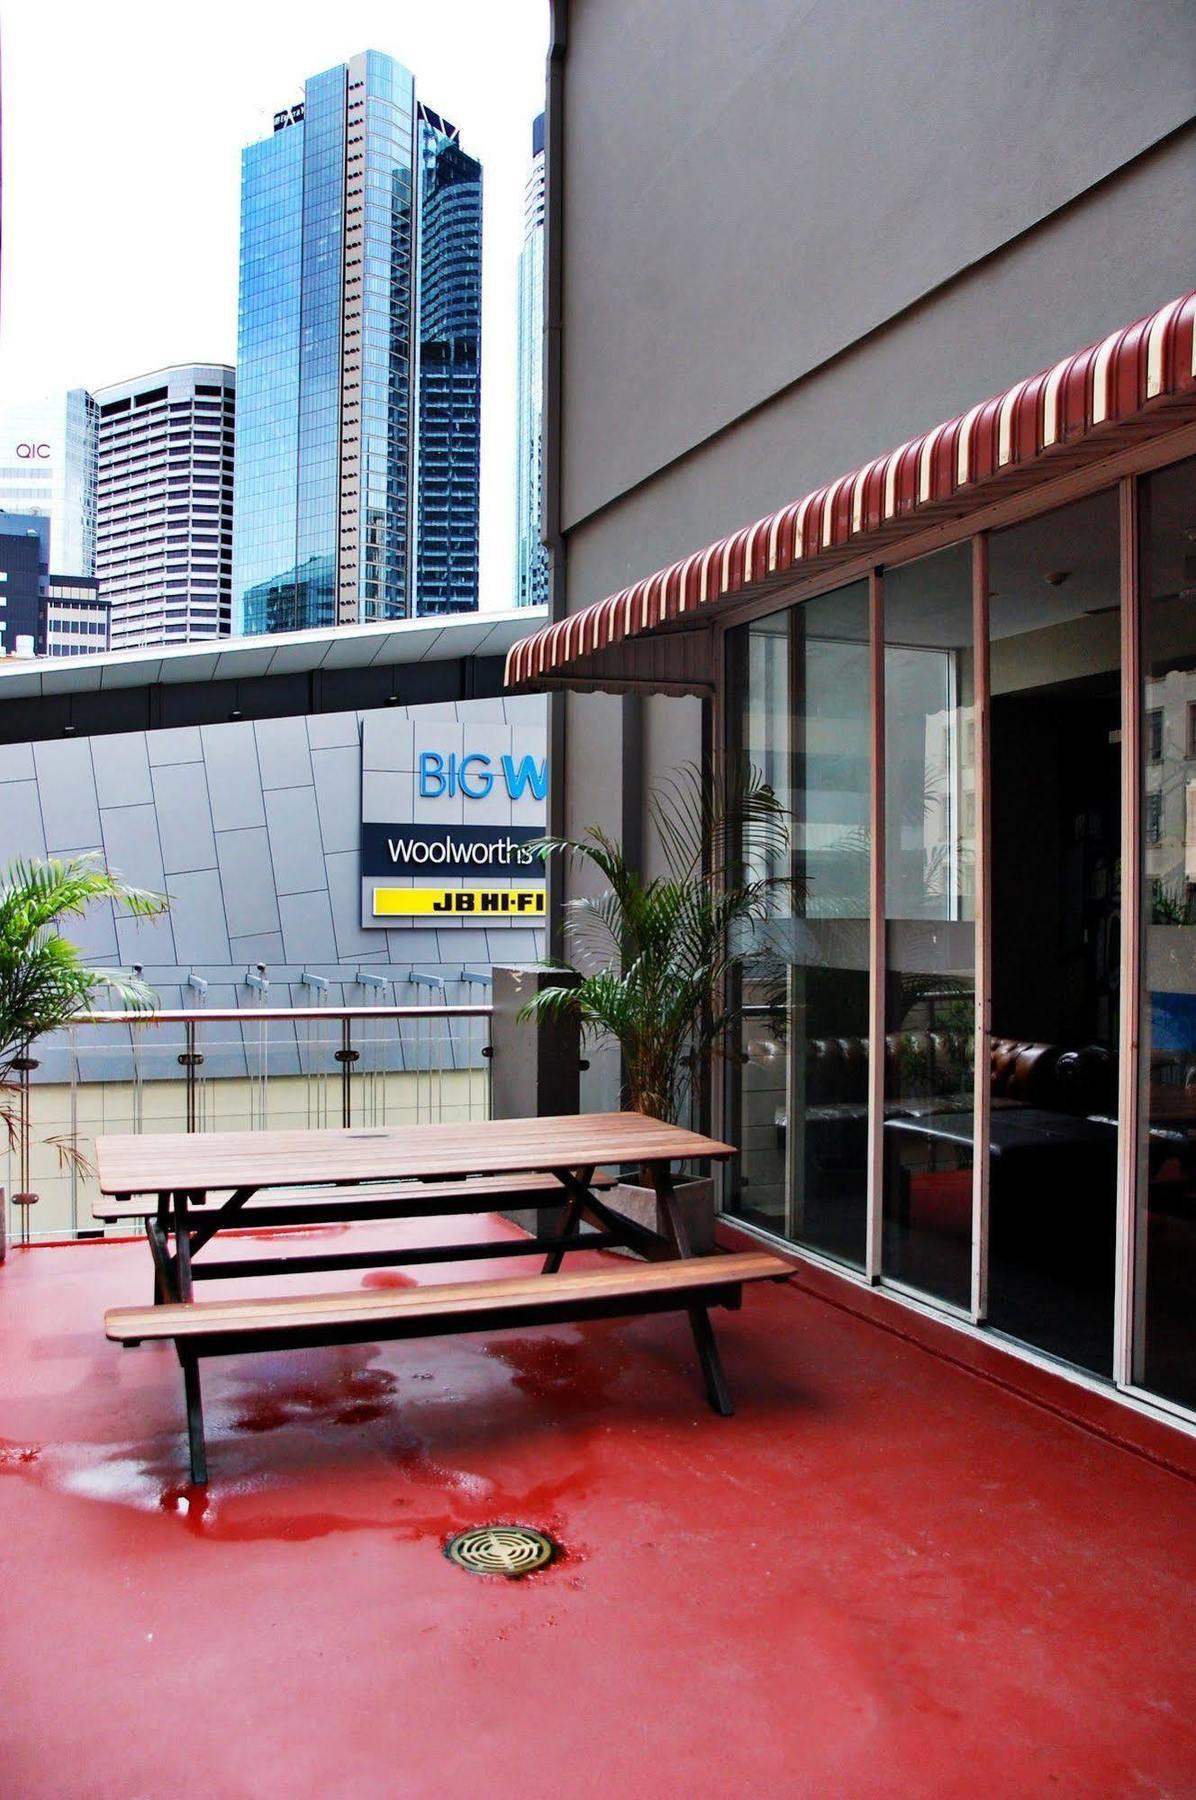 A Pousada Base Brisbane Embassy Exterior foto